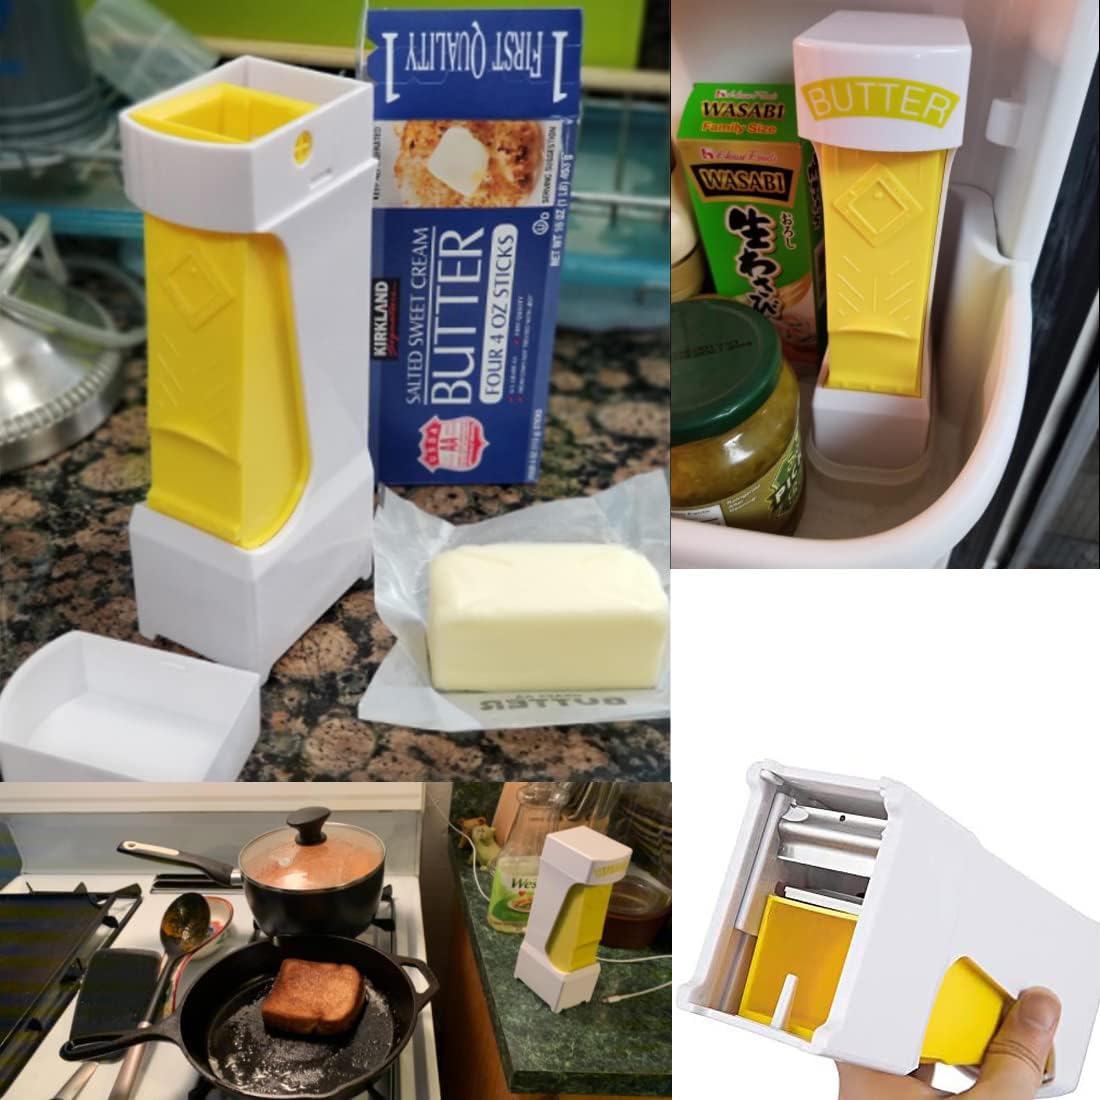 Audson Stick Butter Cutter Slicer Butter Slicer Dispenser Toast Shredder Chocolate Kitchen Tools To Keep Butter Stick Fresh